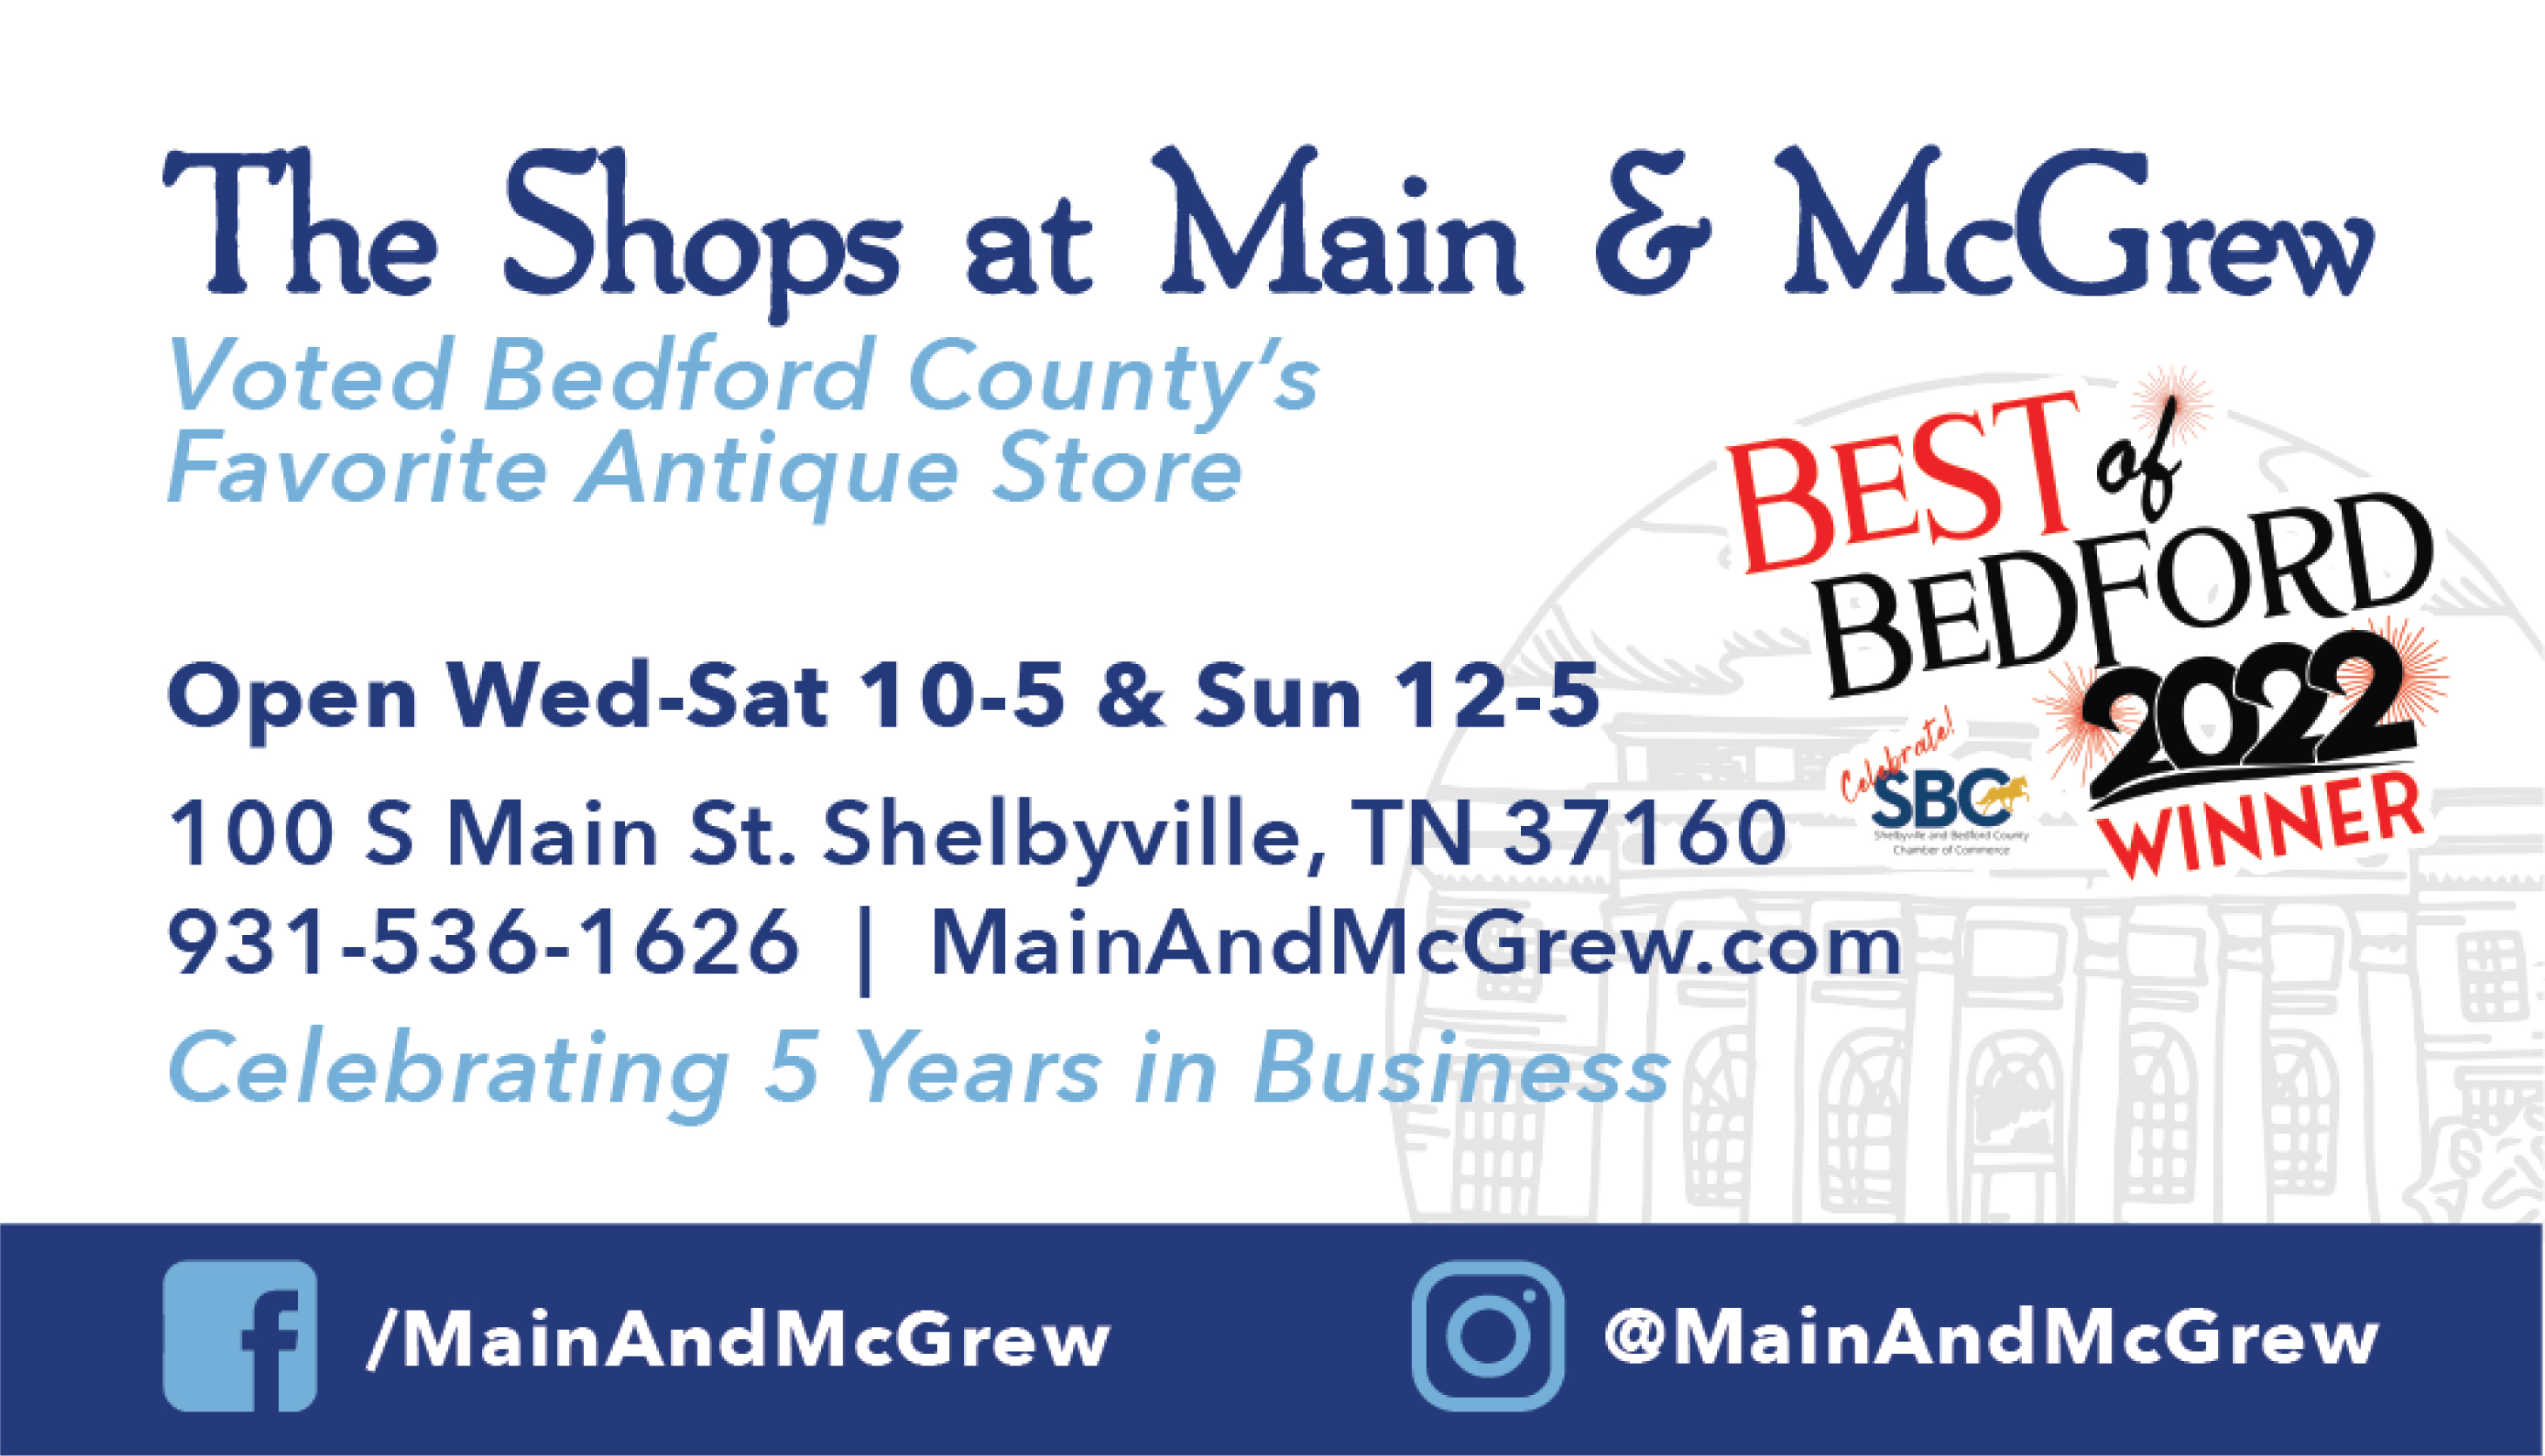 the Shops at Main & McGgrew ad